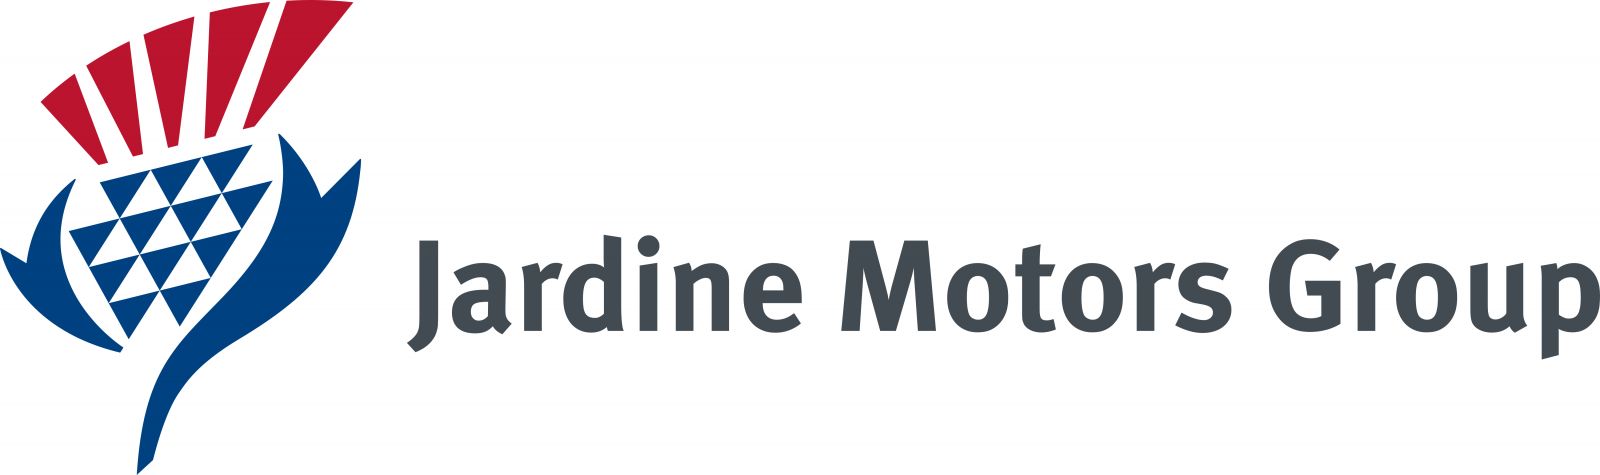 Jardine Motor logo